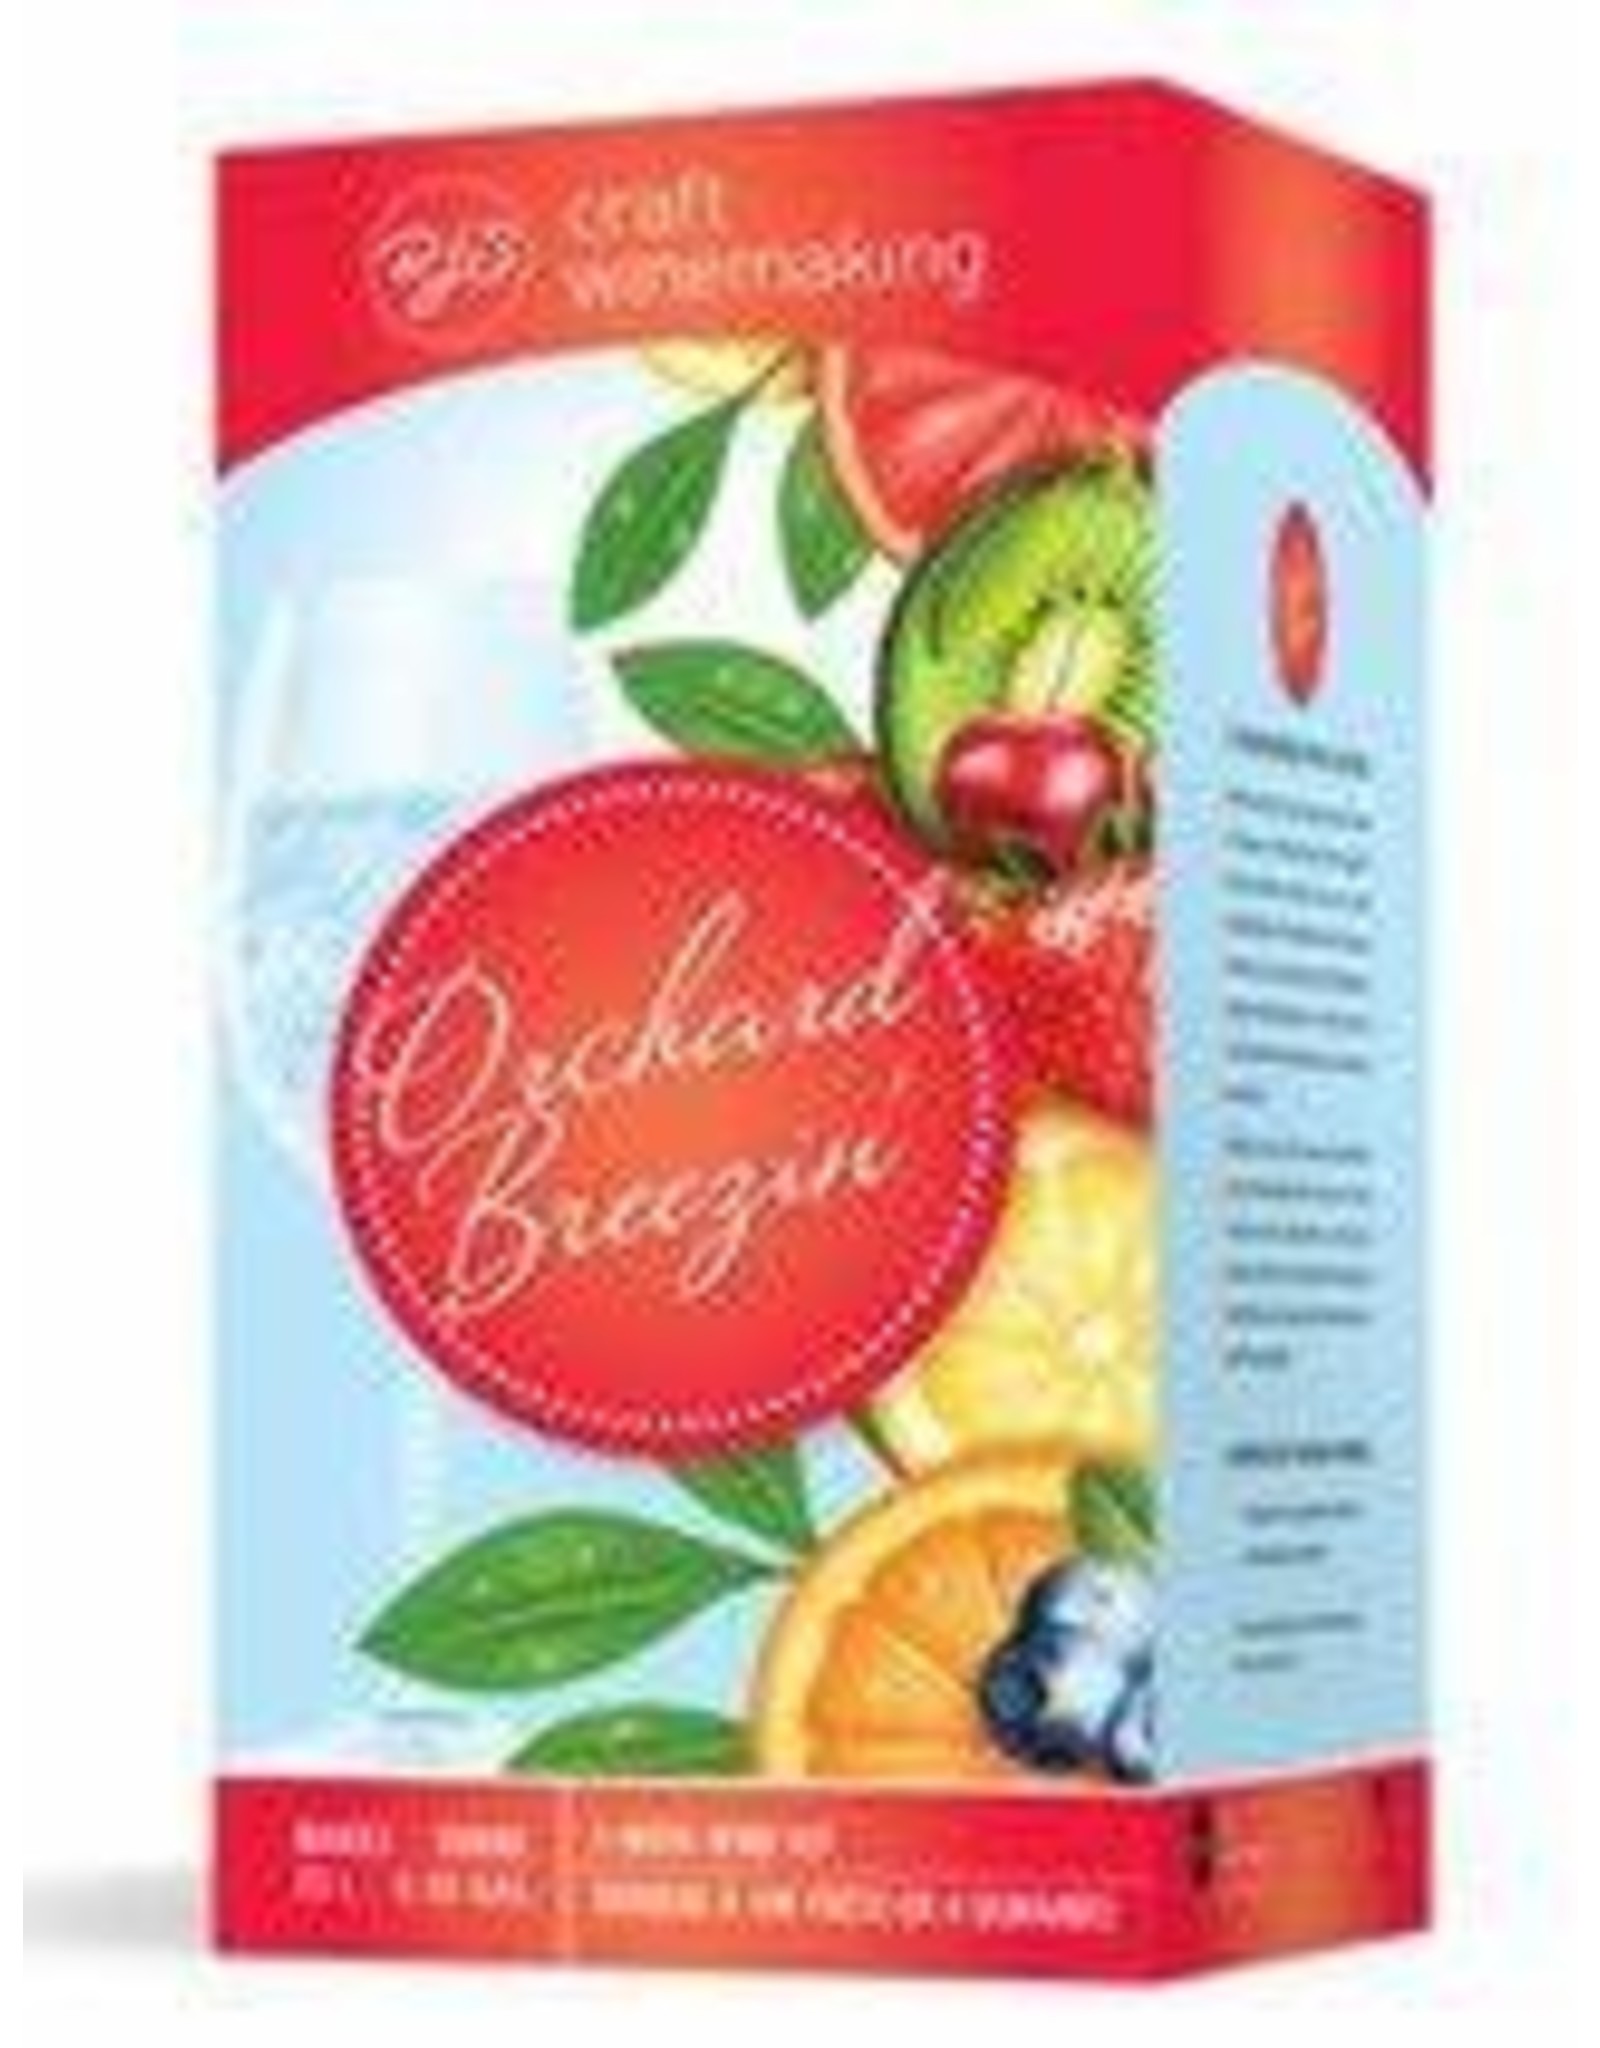 Orchard Breeze Orchard Breezin RJS Craft Wine 5.4L Blueberry Bliss